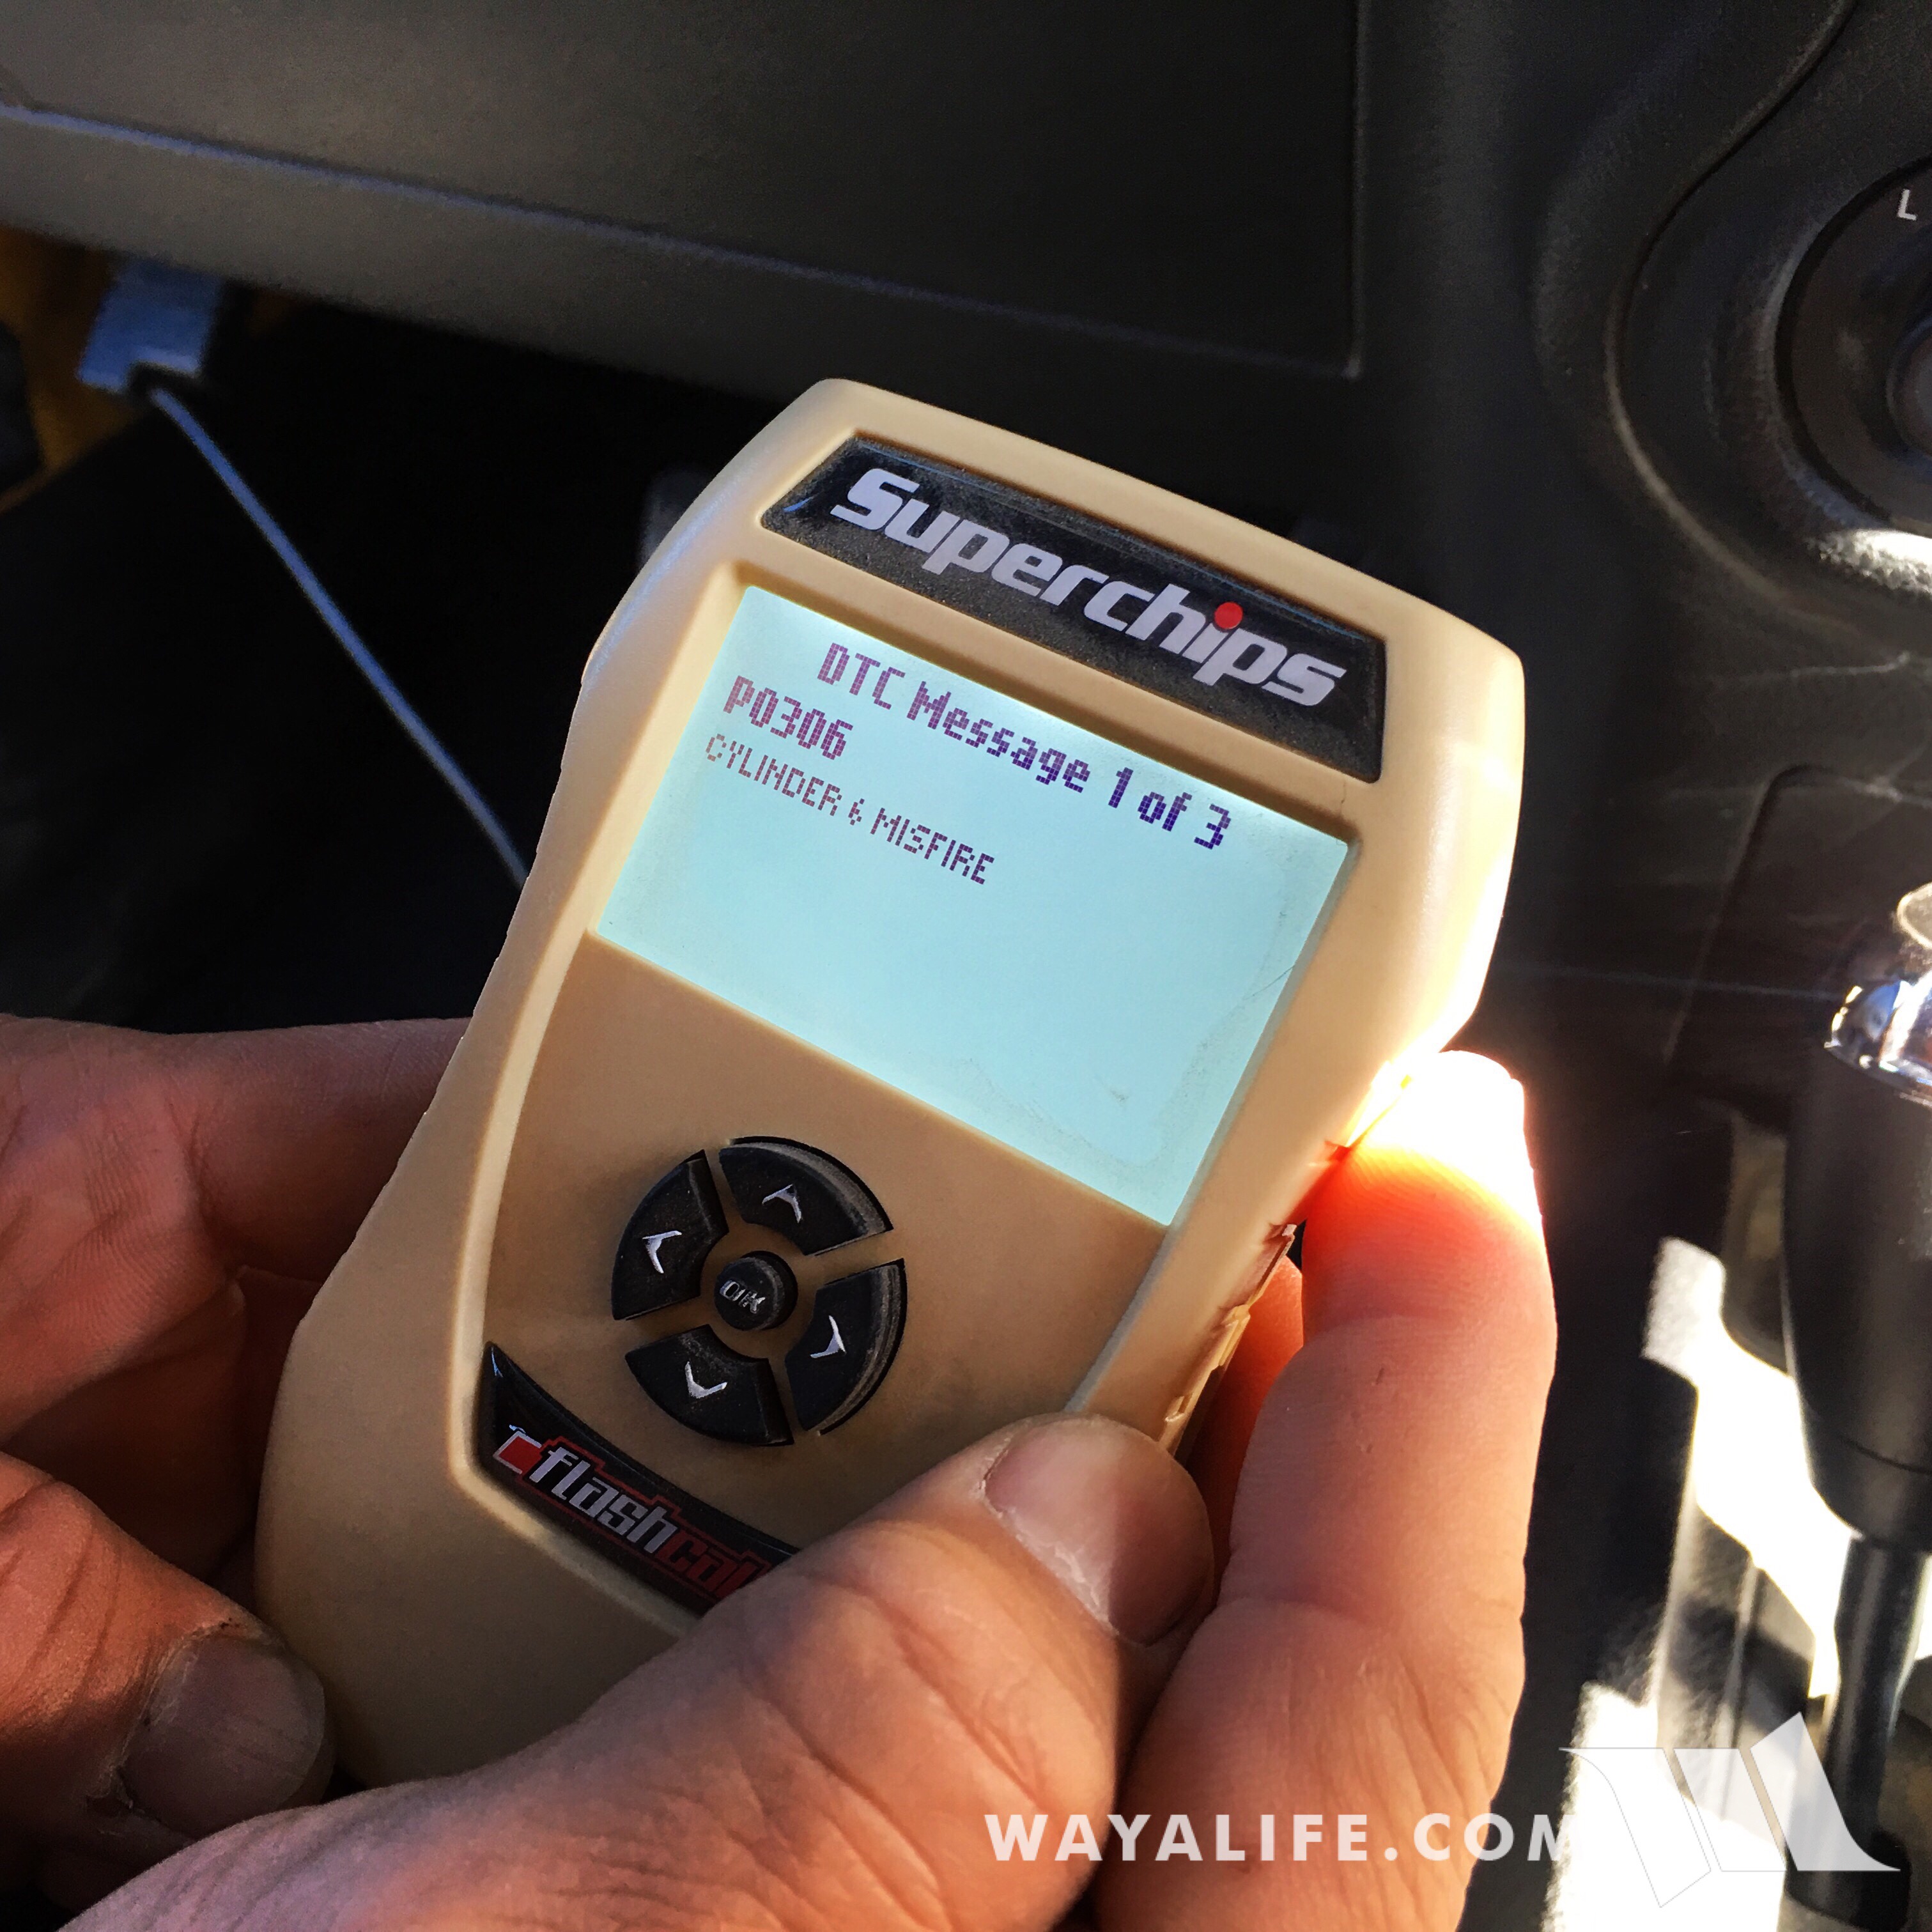 P0306 STRIKES RUBICAT AGAIN : Jeep JK Wrangler Cylinder 6 Misfire –  WAYALIFE Blog